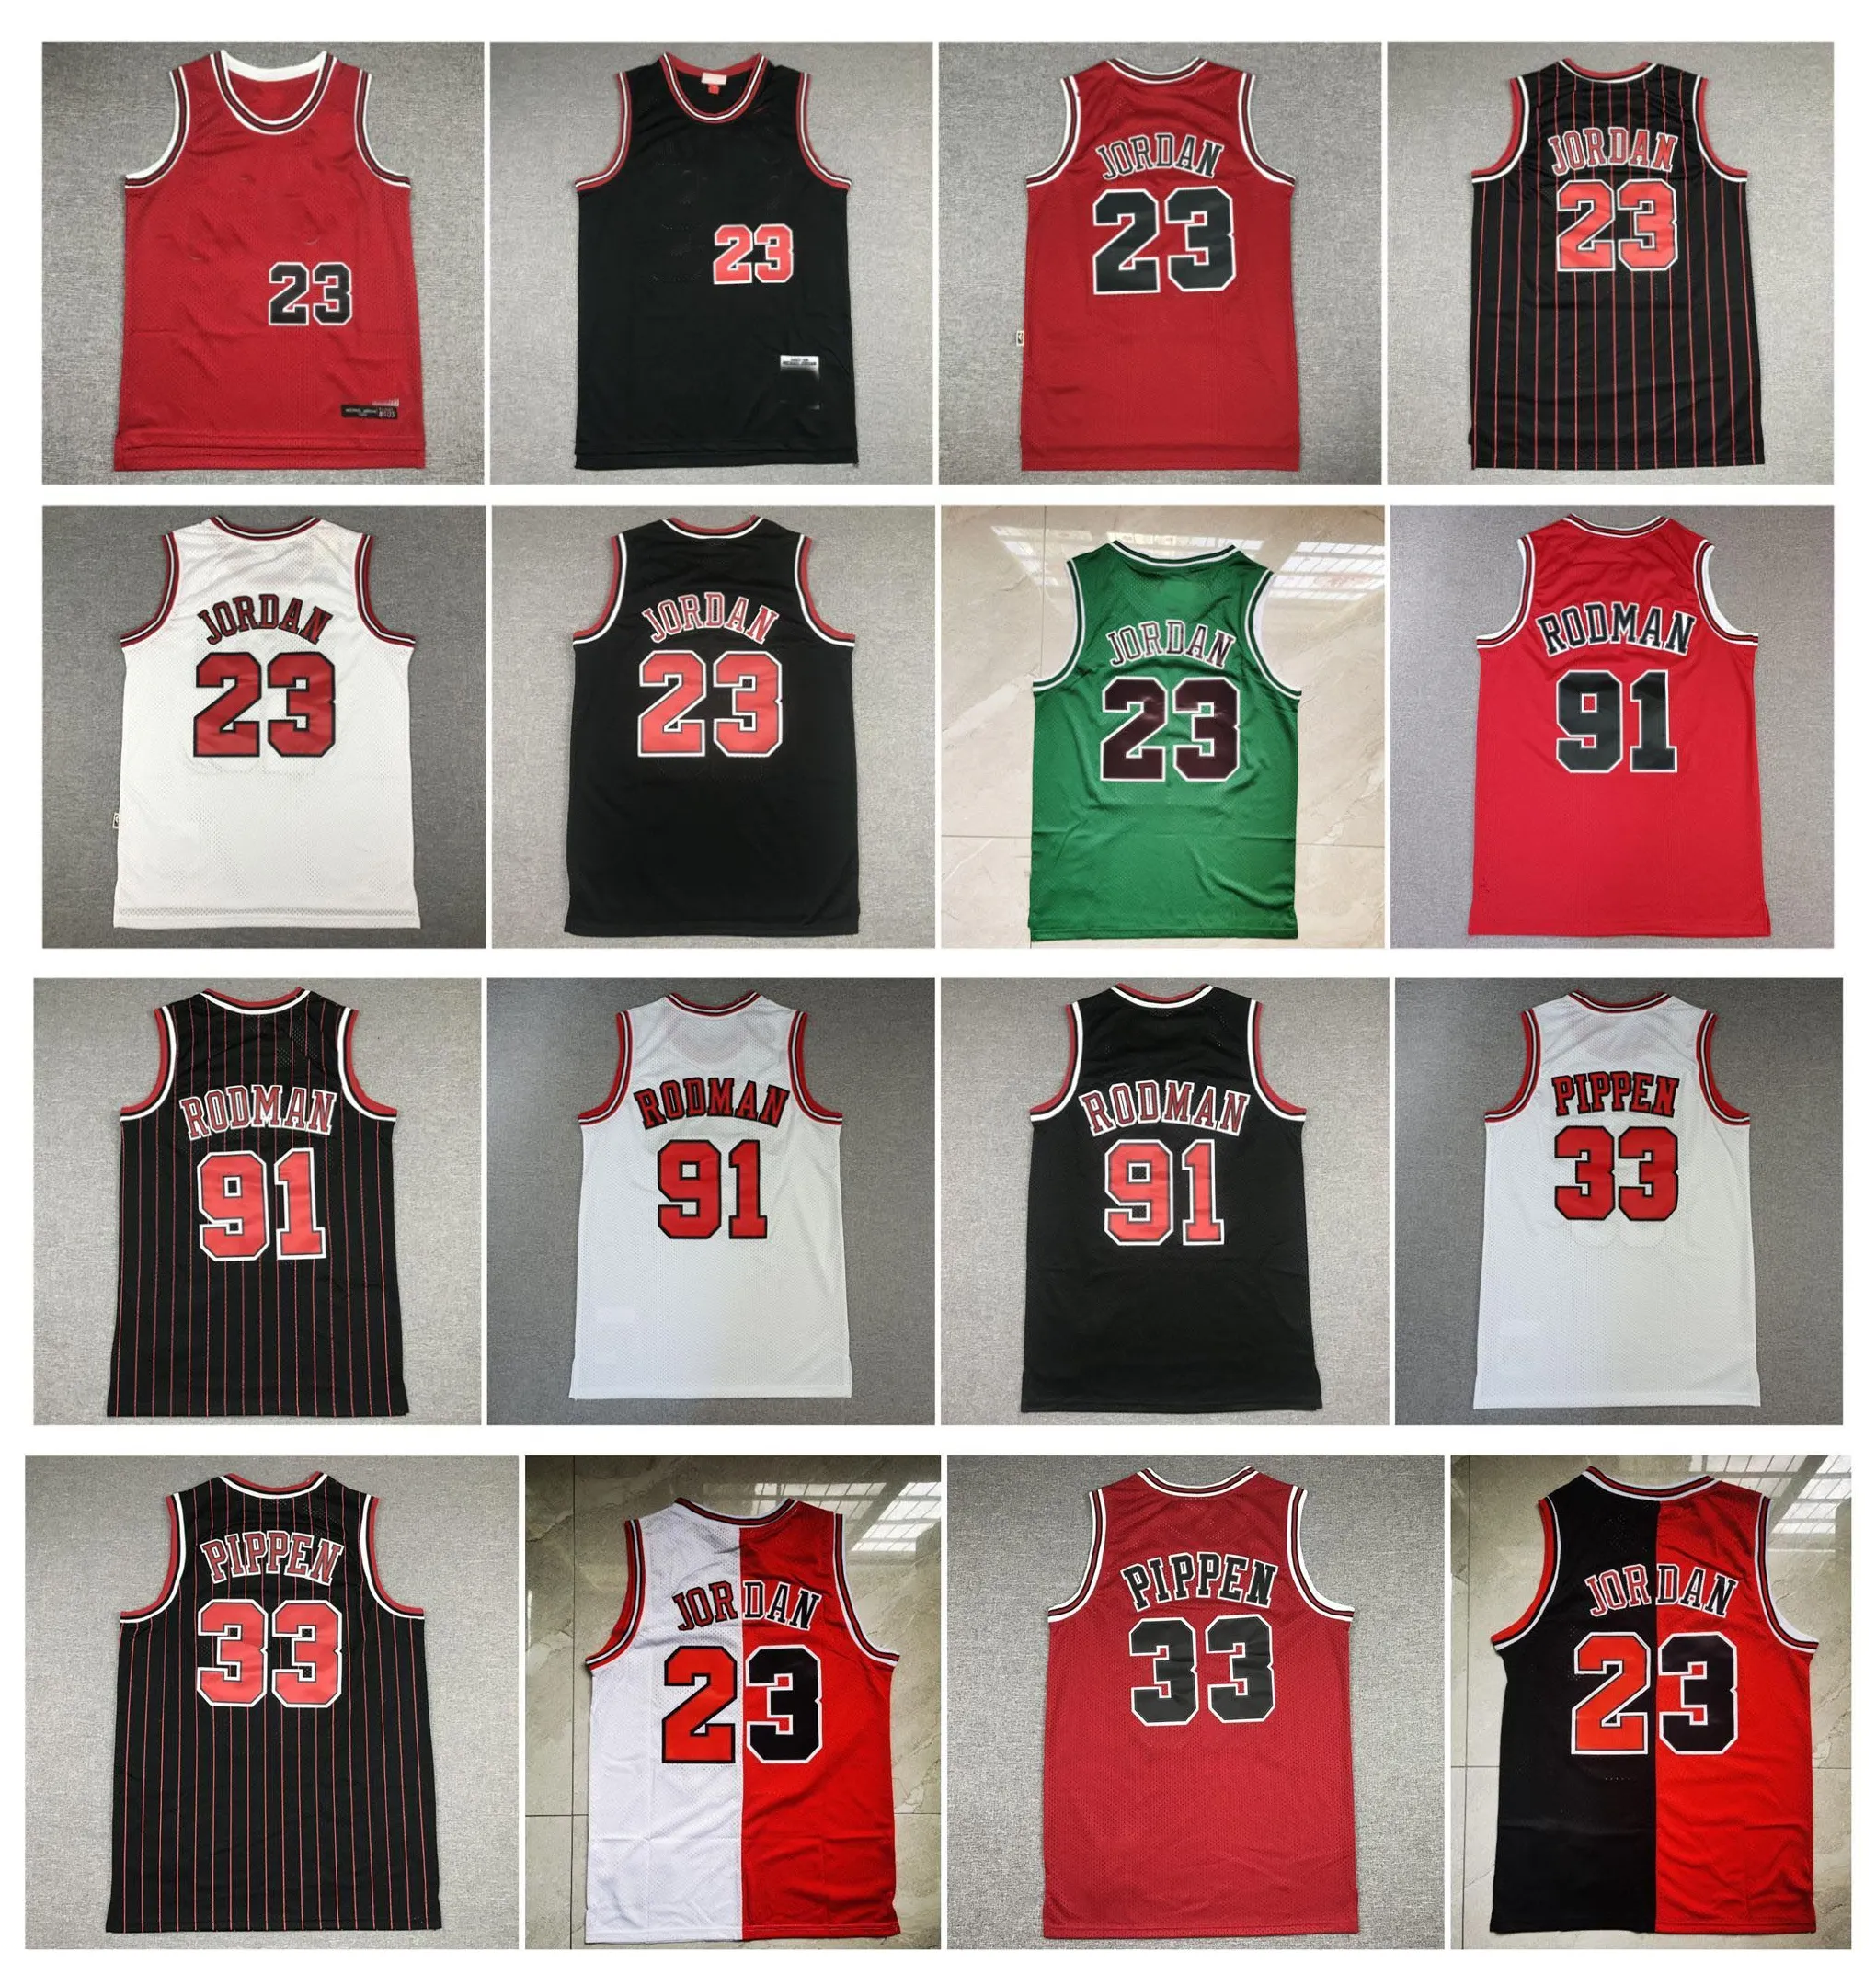 23 Michael Jor Dan 33 Scottie Pippen Basketball Jersey 91 Dennis Rodman Trowback Red Bianco Black Green Size S-XXL